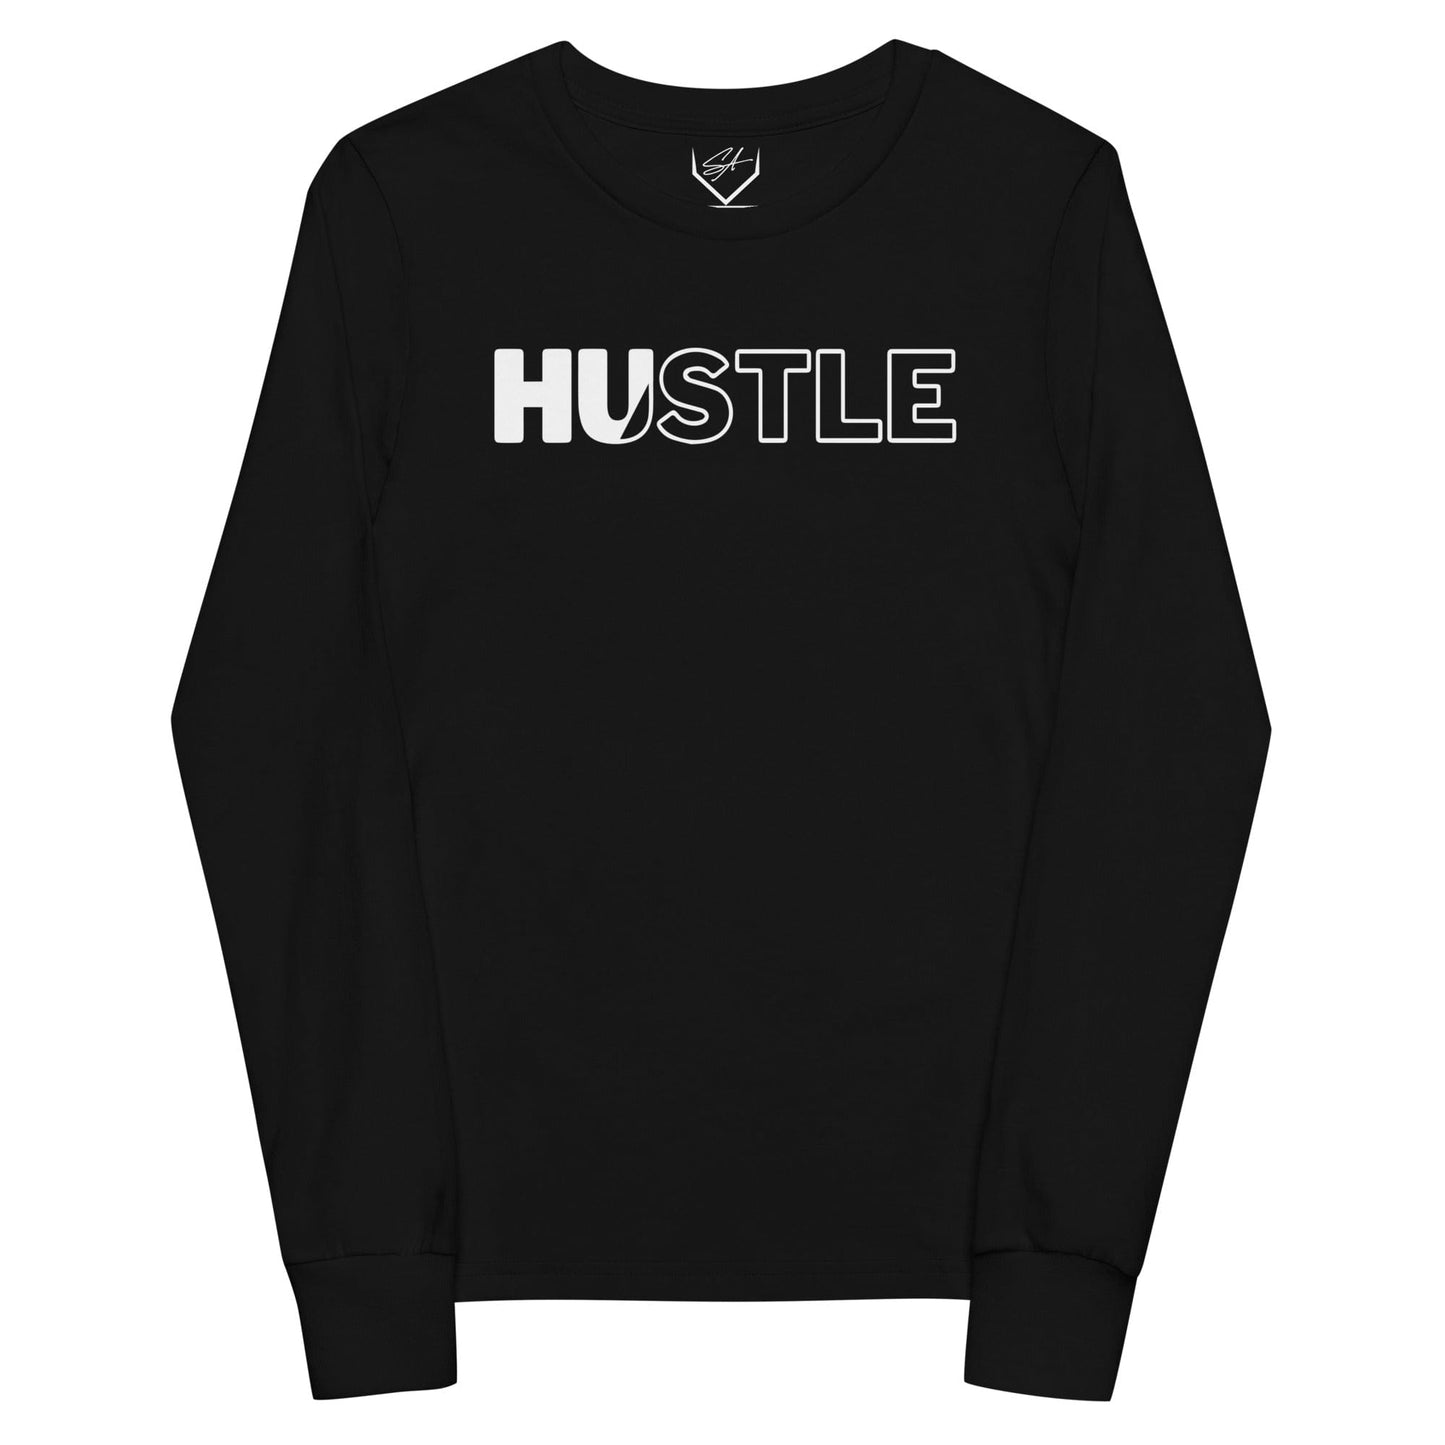 Hustle - Youth Long Sleeve